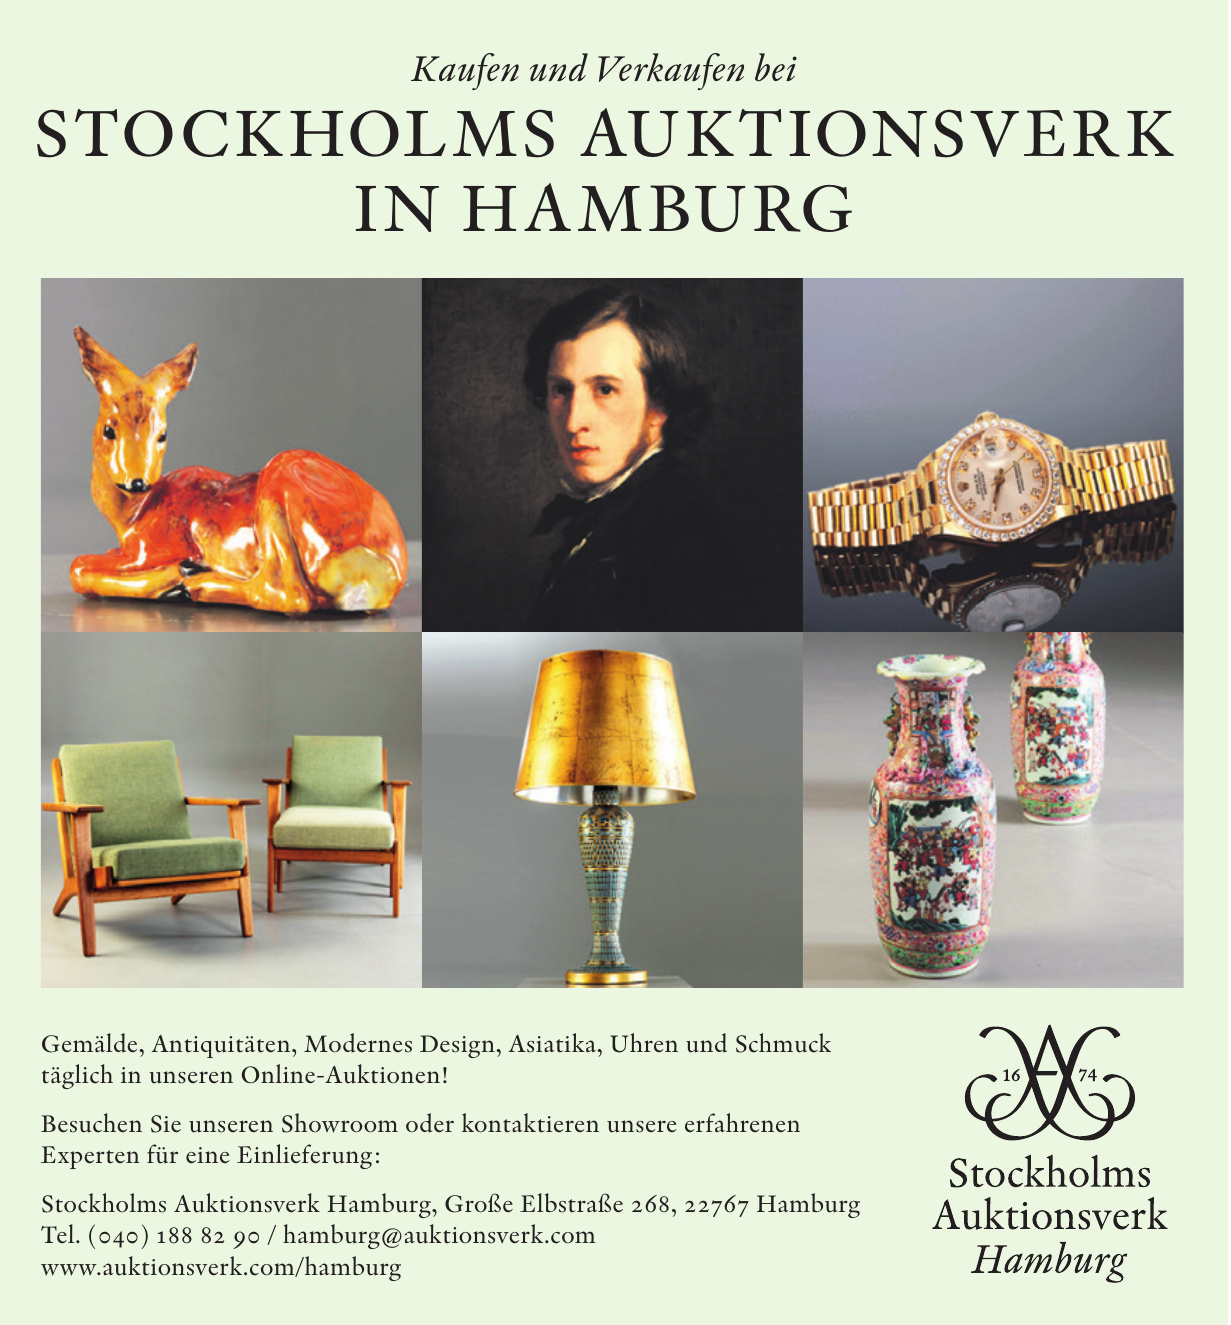 Stockholms Auktionsverk Hamburg